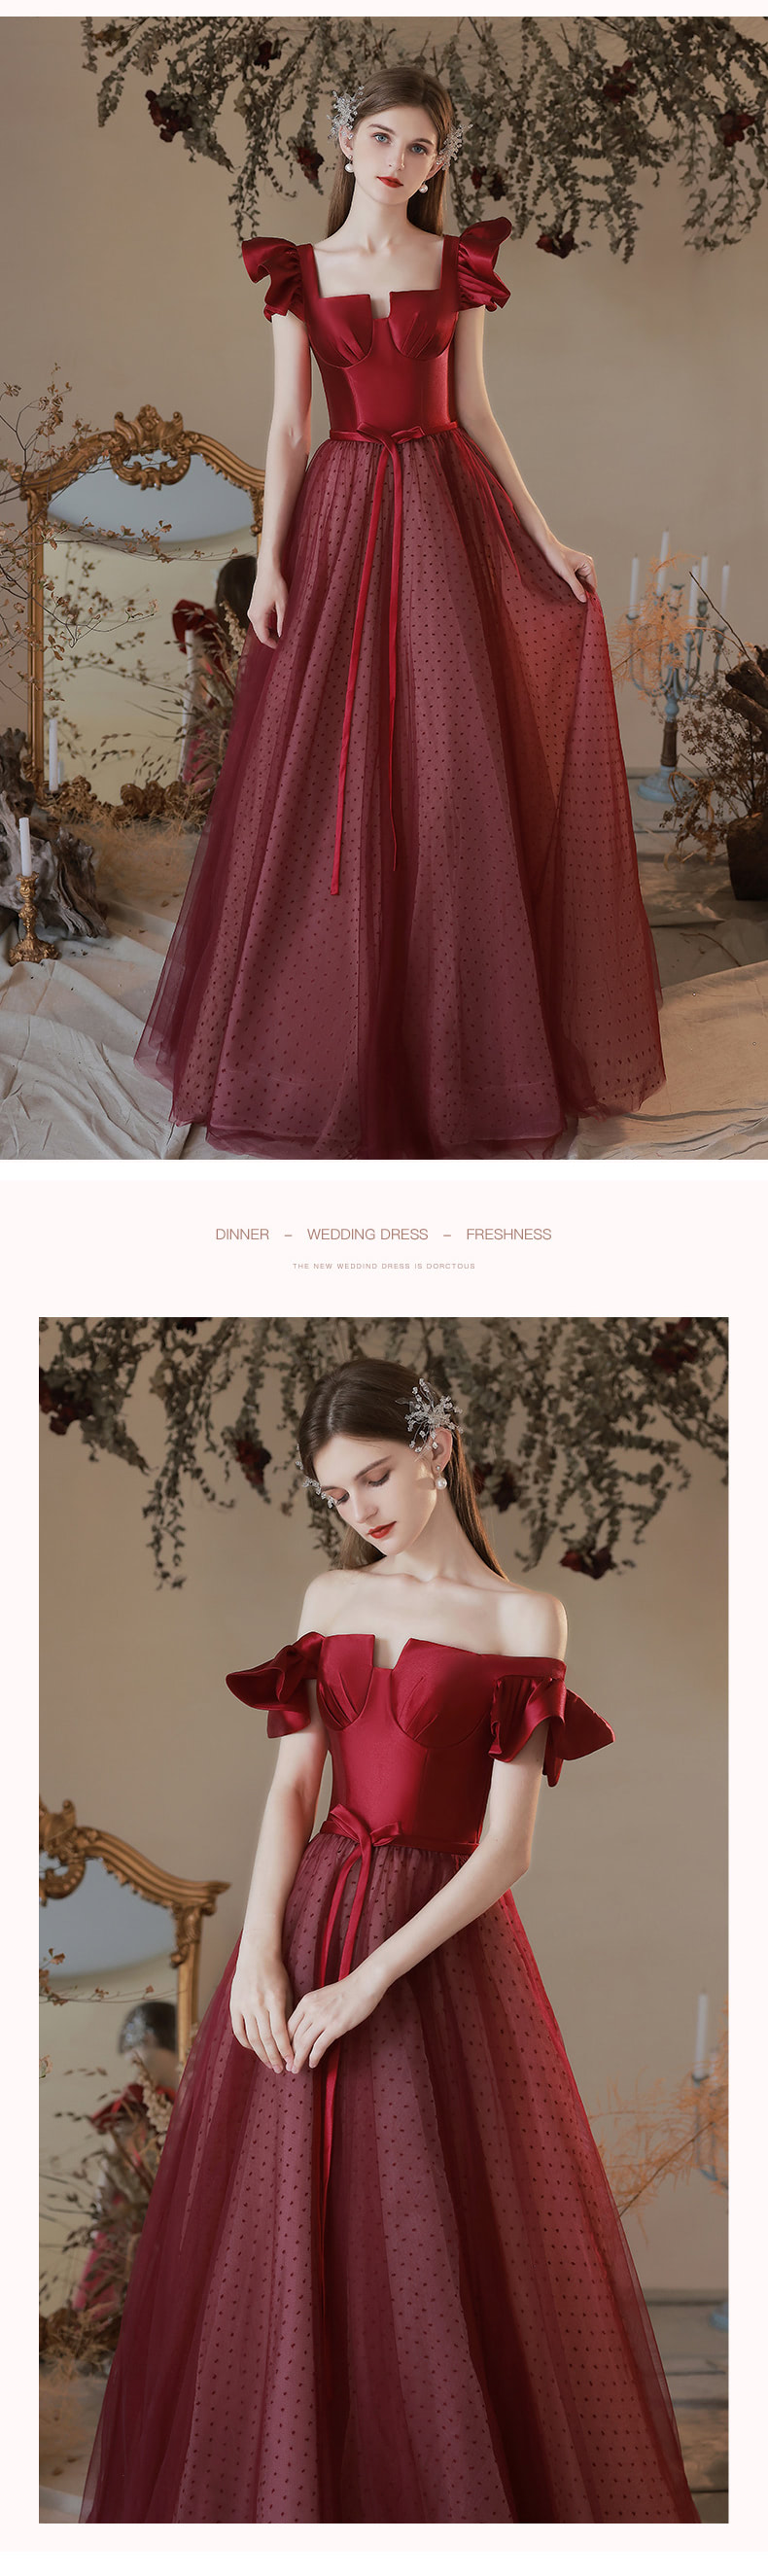 Sleeveless-Red-Satin-Prom-Dress-Long-Evening-Formal-Wear-Ballgown13.jpg